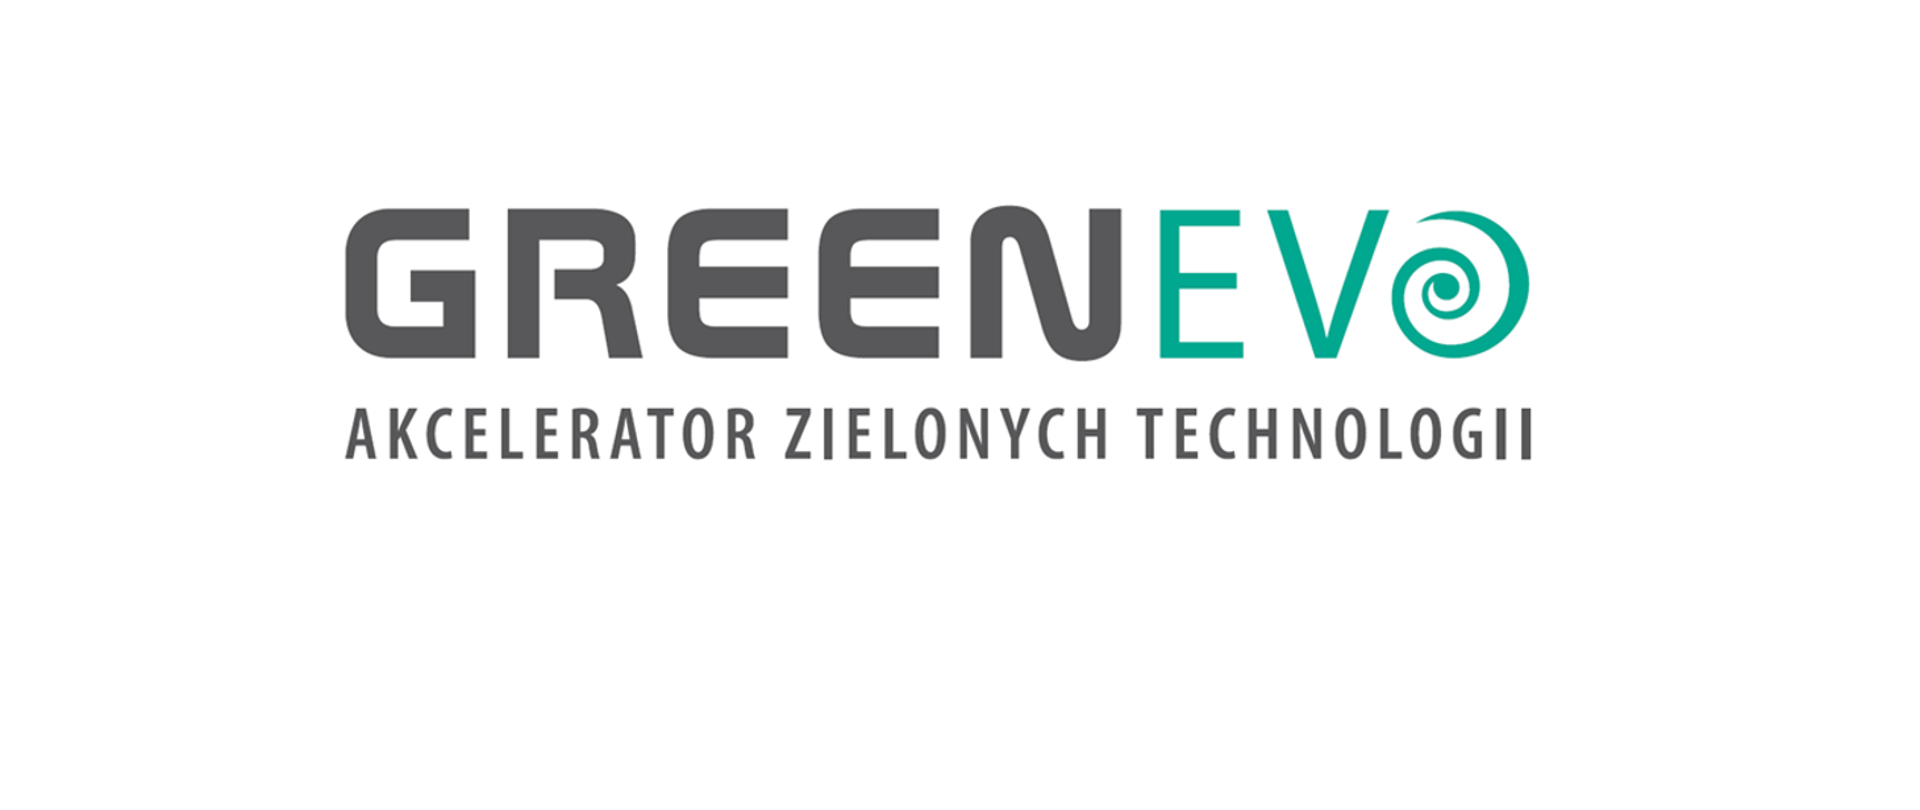 Green EVO logo